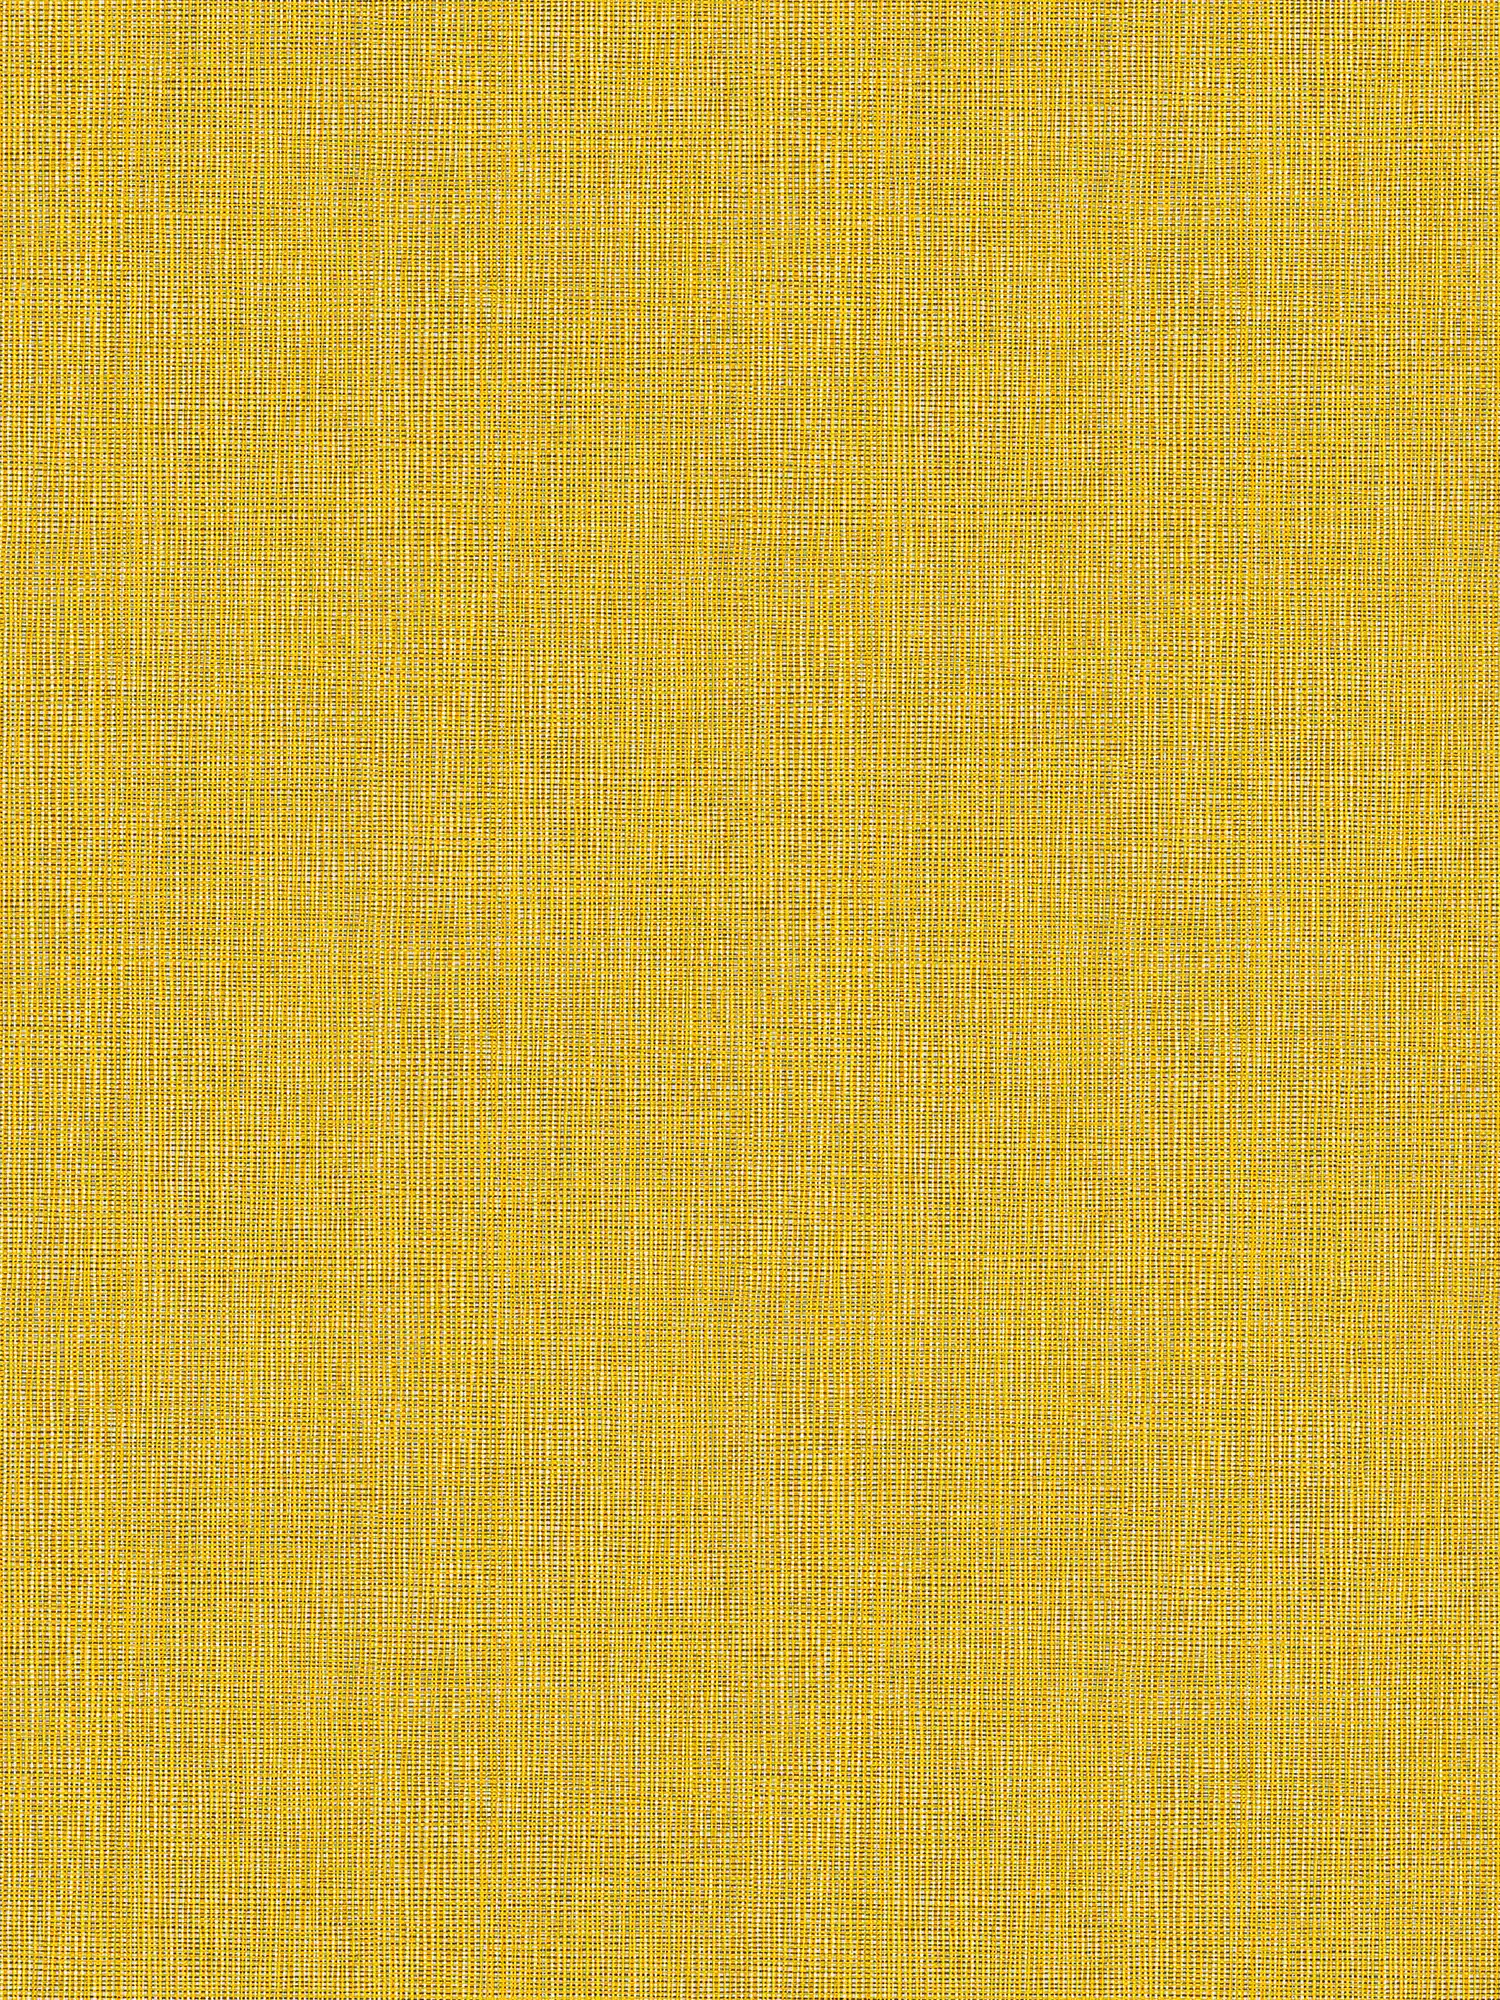 Uni-Tapete Textil Optik mit Details in Silber & Grau – Gelb, Grau, Silber
